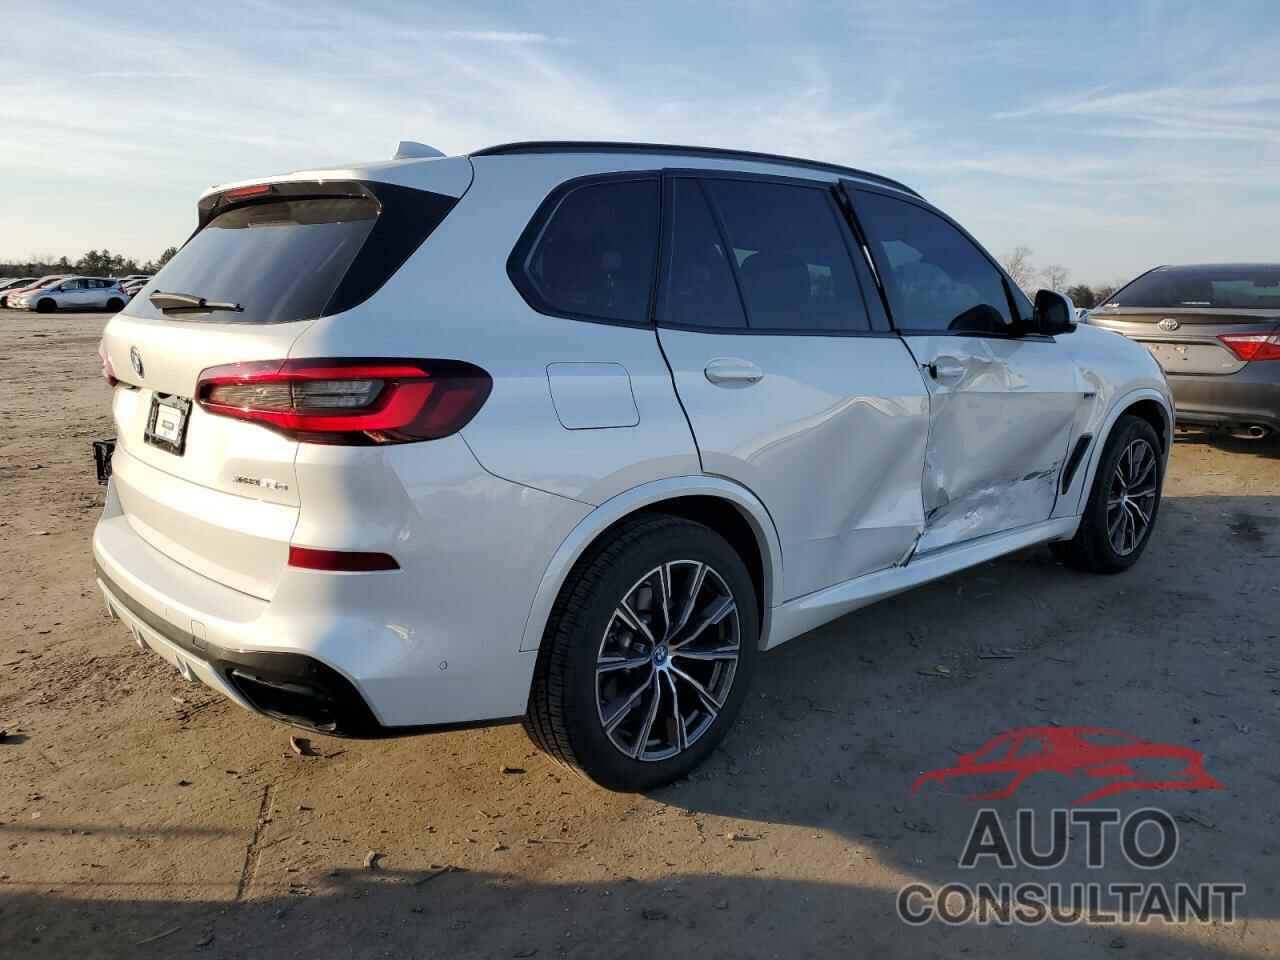 BMW X5 2022 - 5UXTA6C0XN9K67706